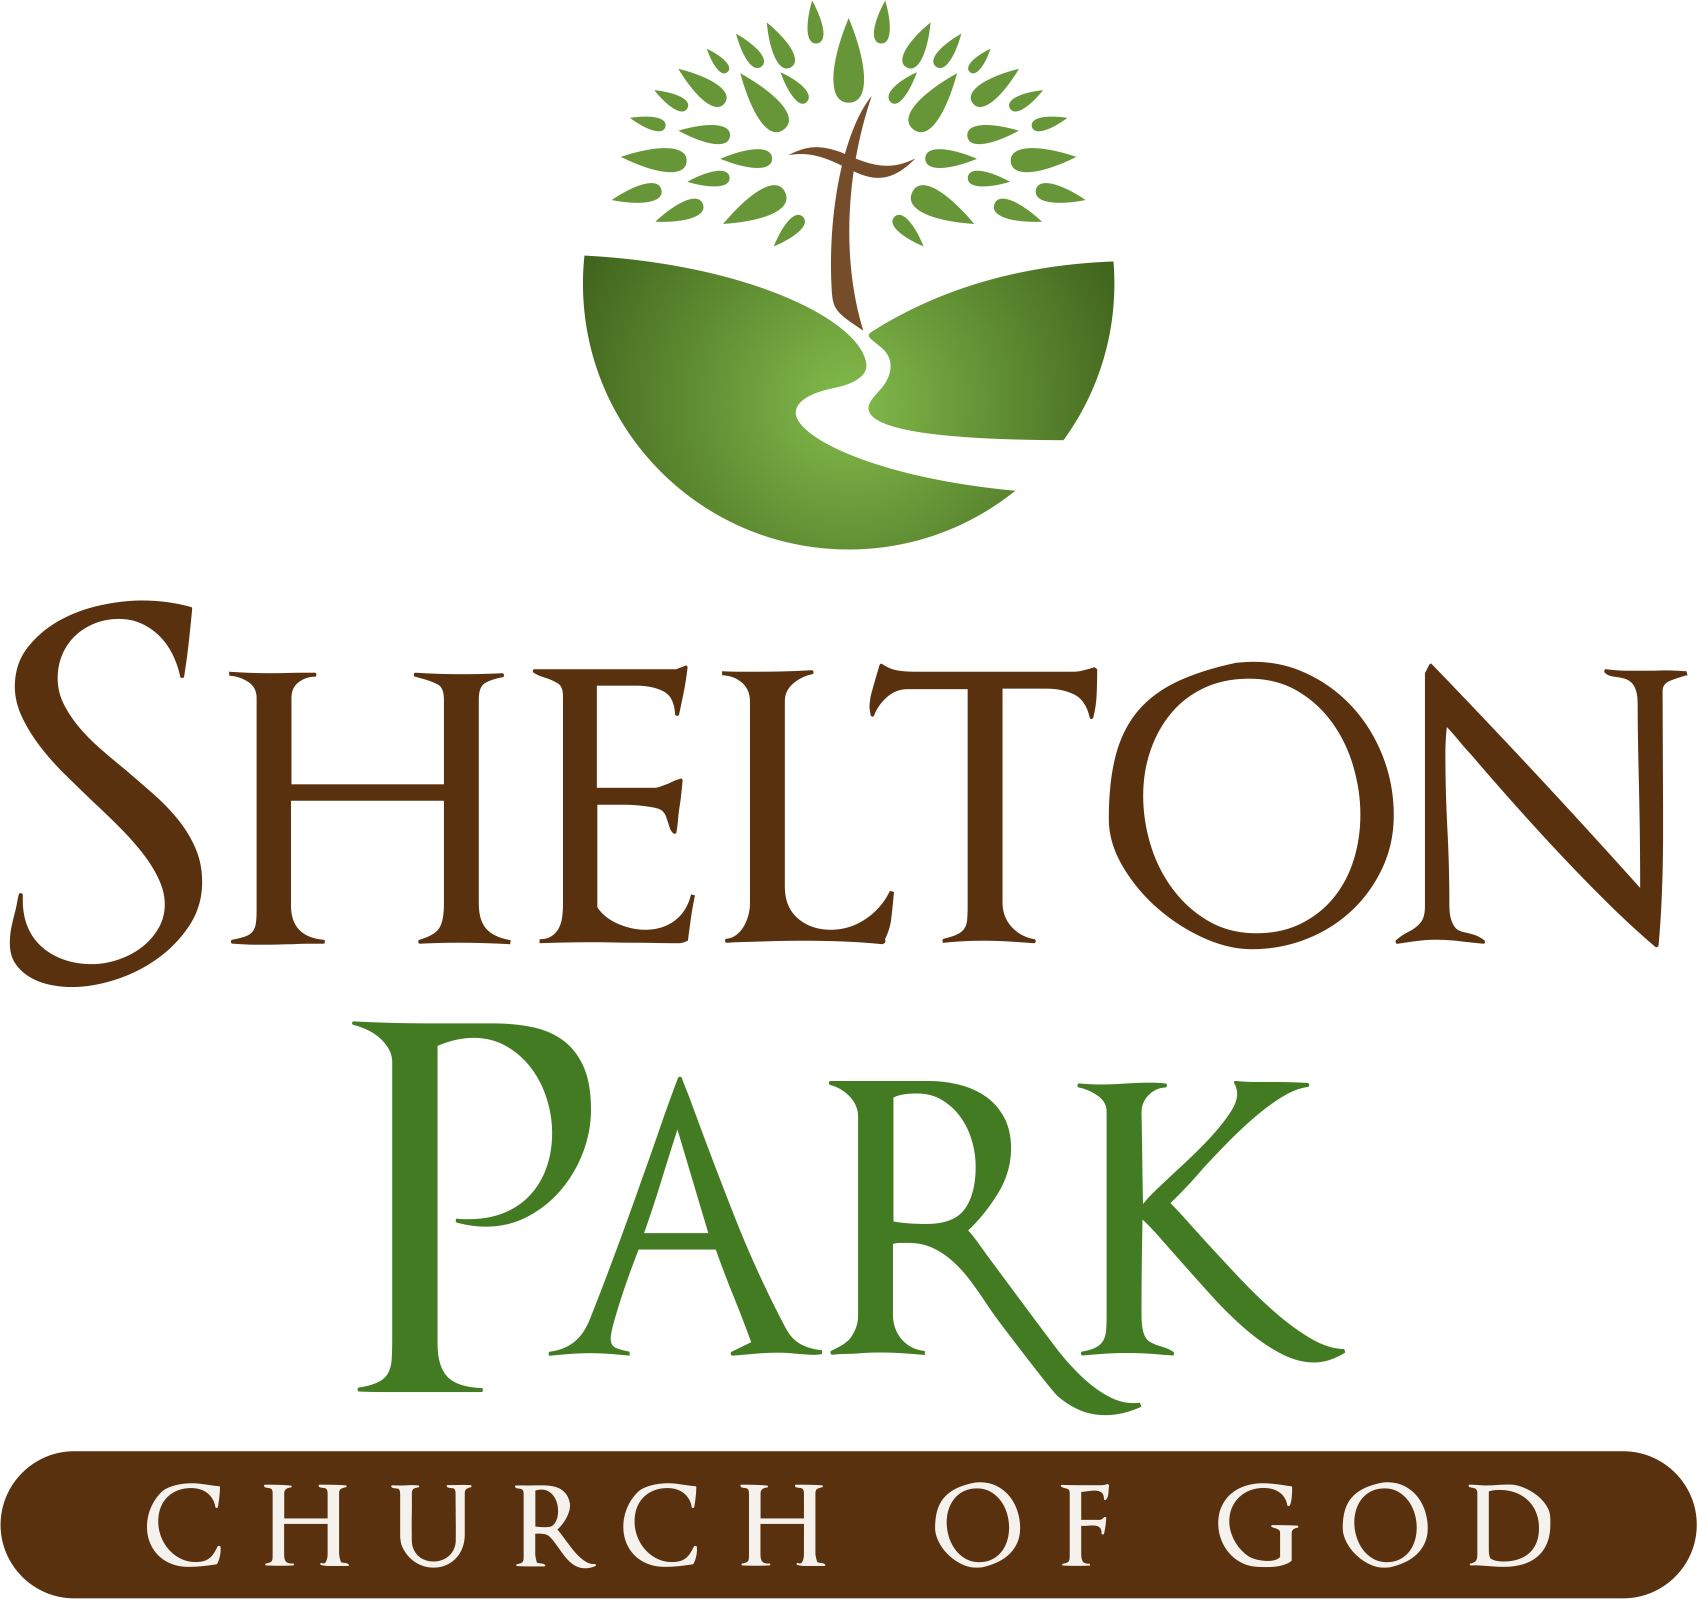 Shelton Park Church of God